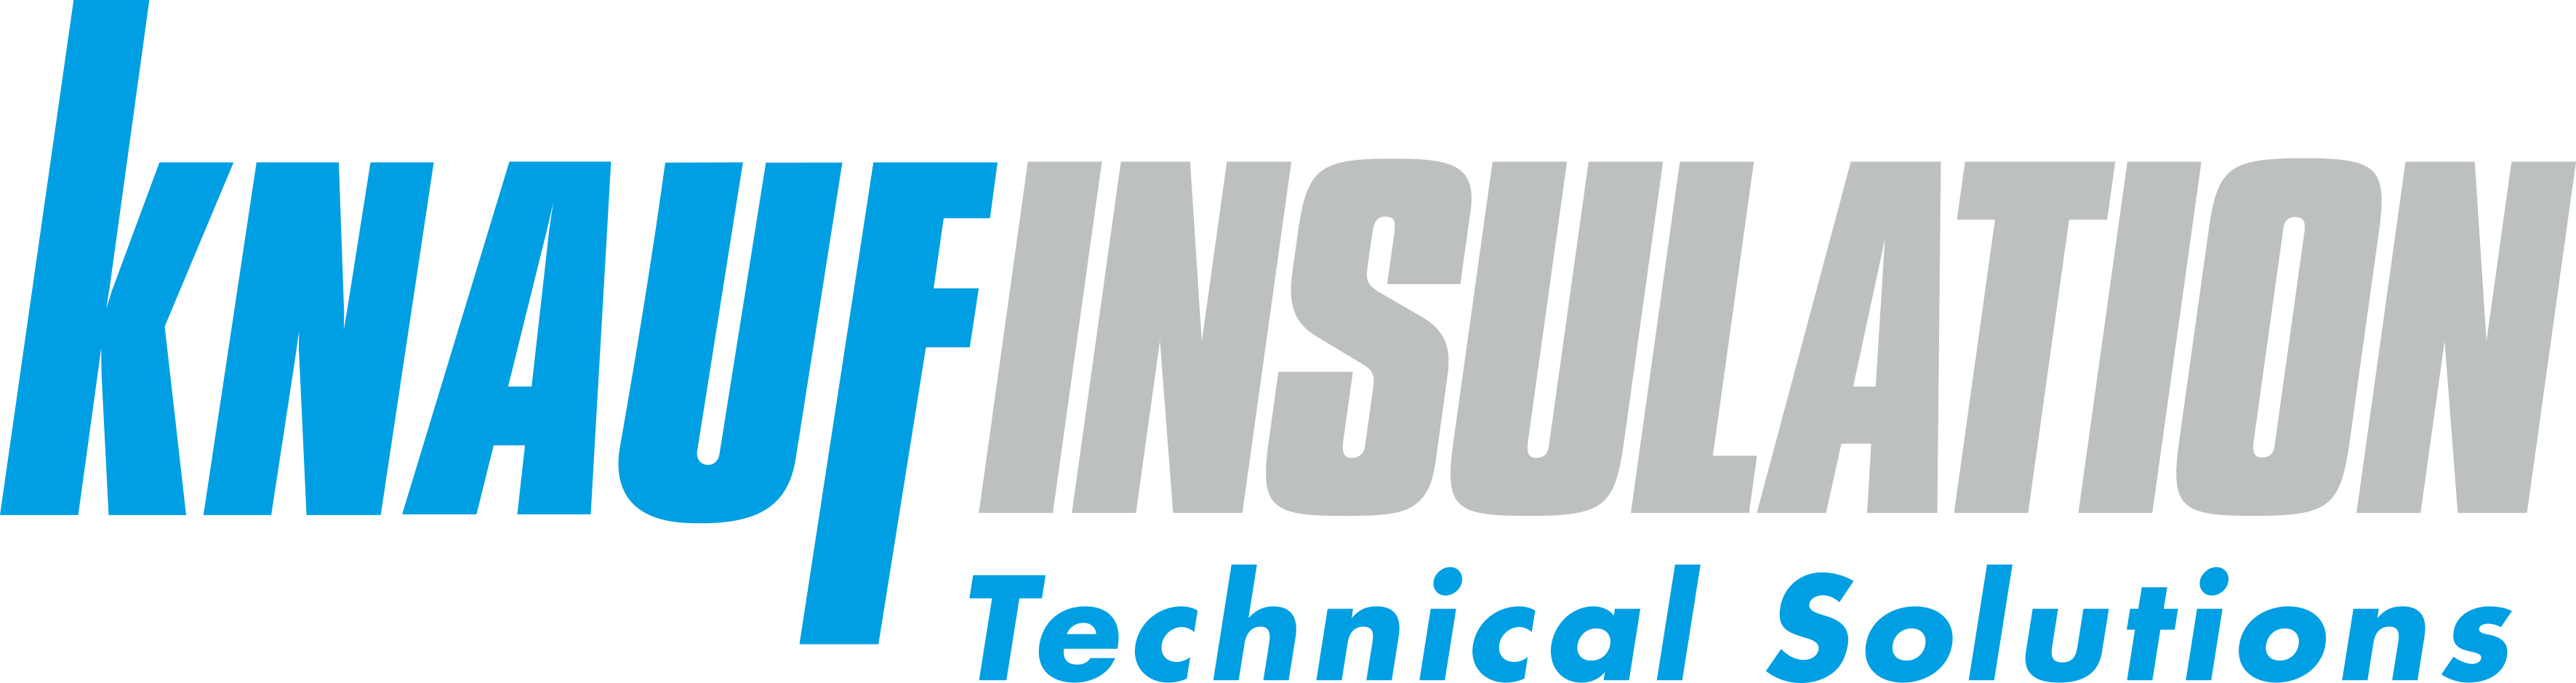 Knauf Insulation Technical Solutions (Knauf Insulation d.o.o.)